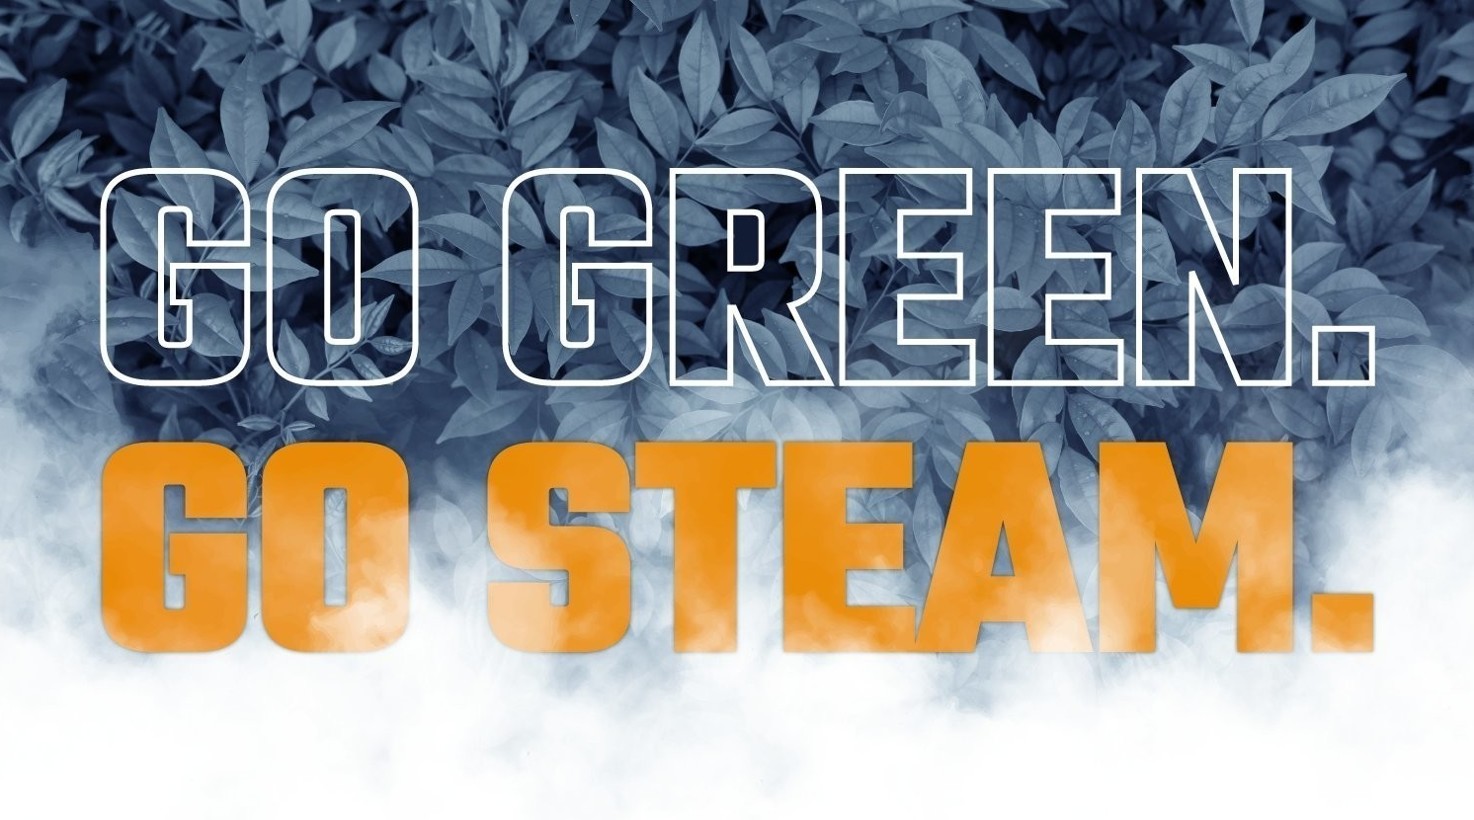 Go Green. Go Steam